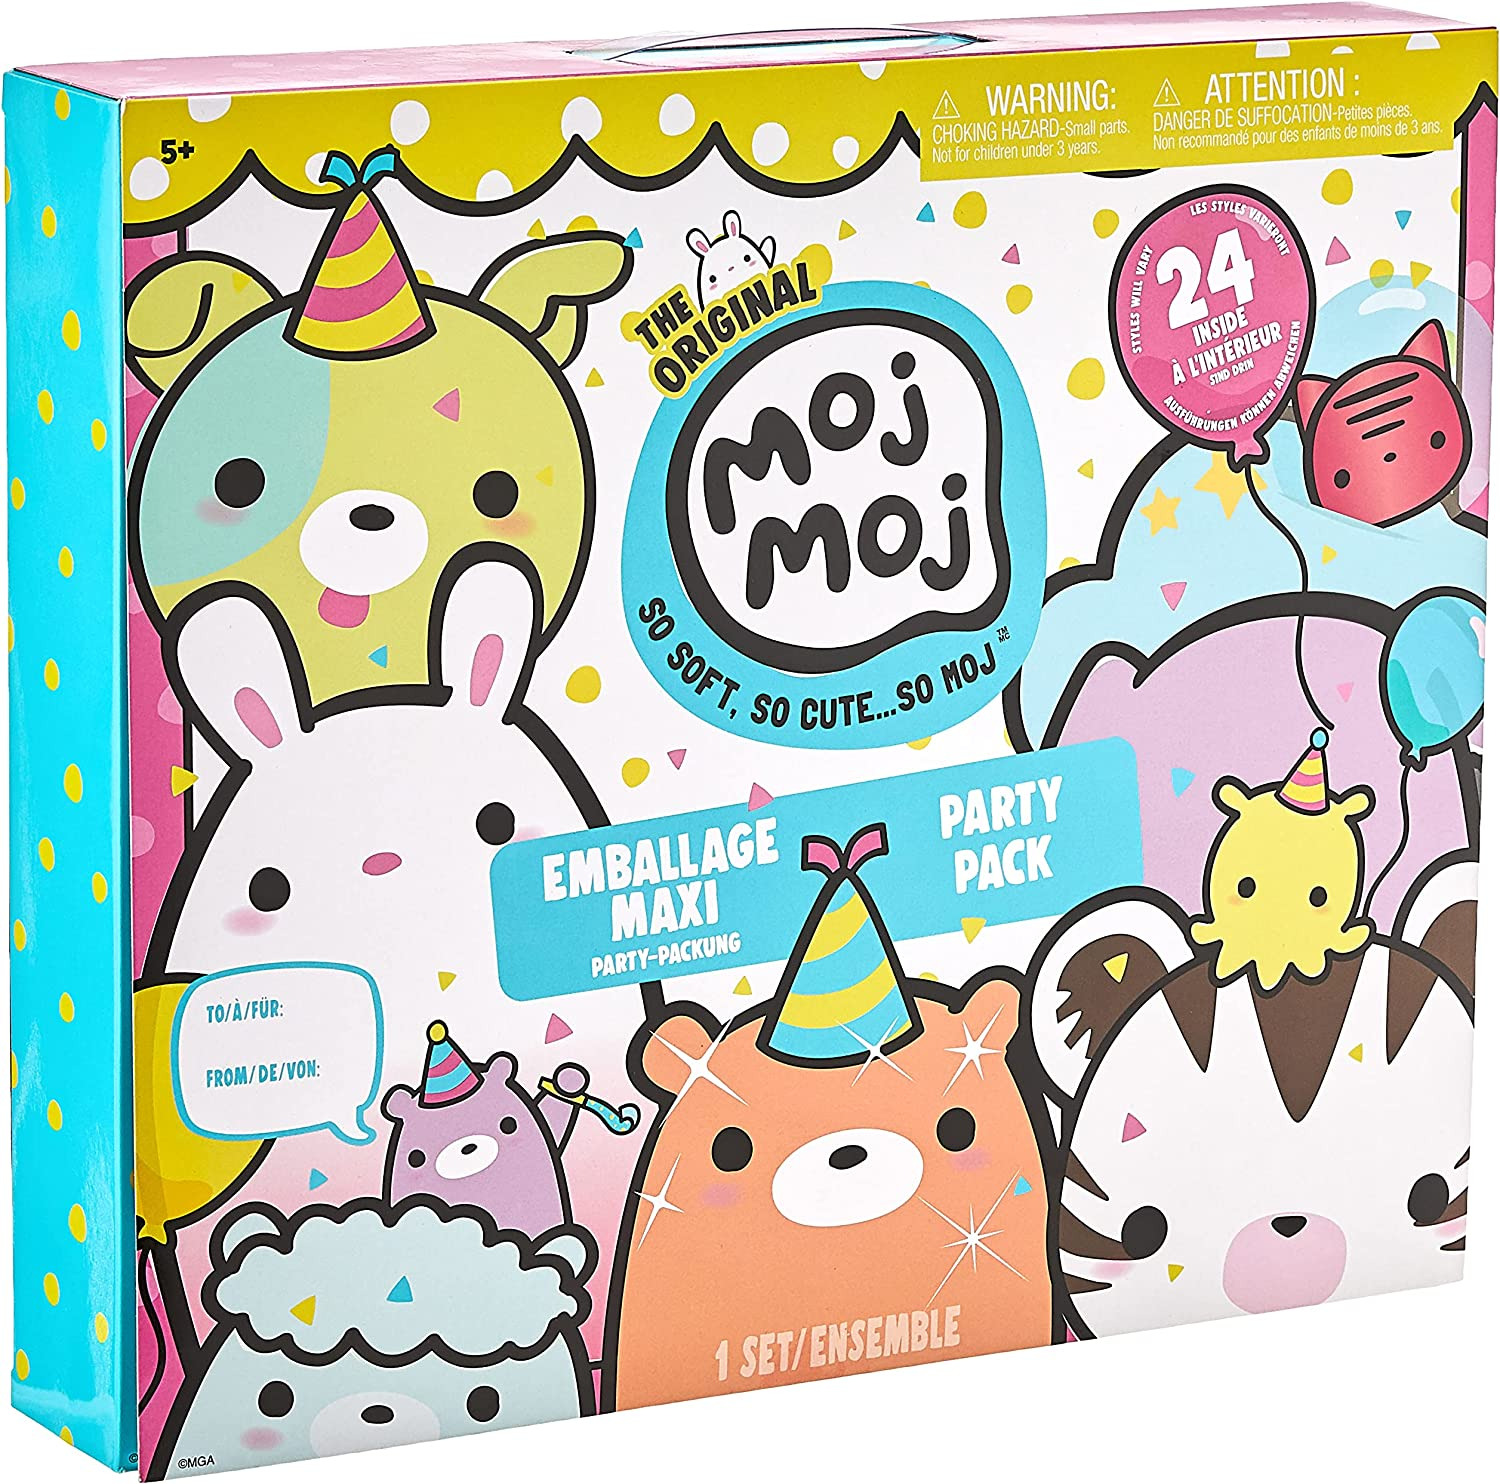 Moj Moj the Original Party Pack with 24 Surprise